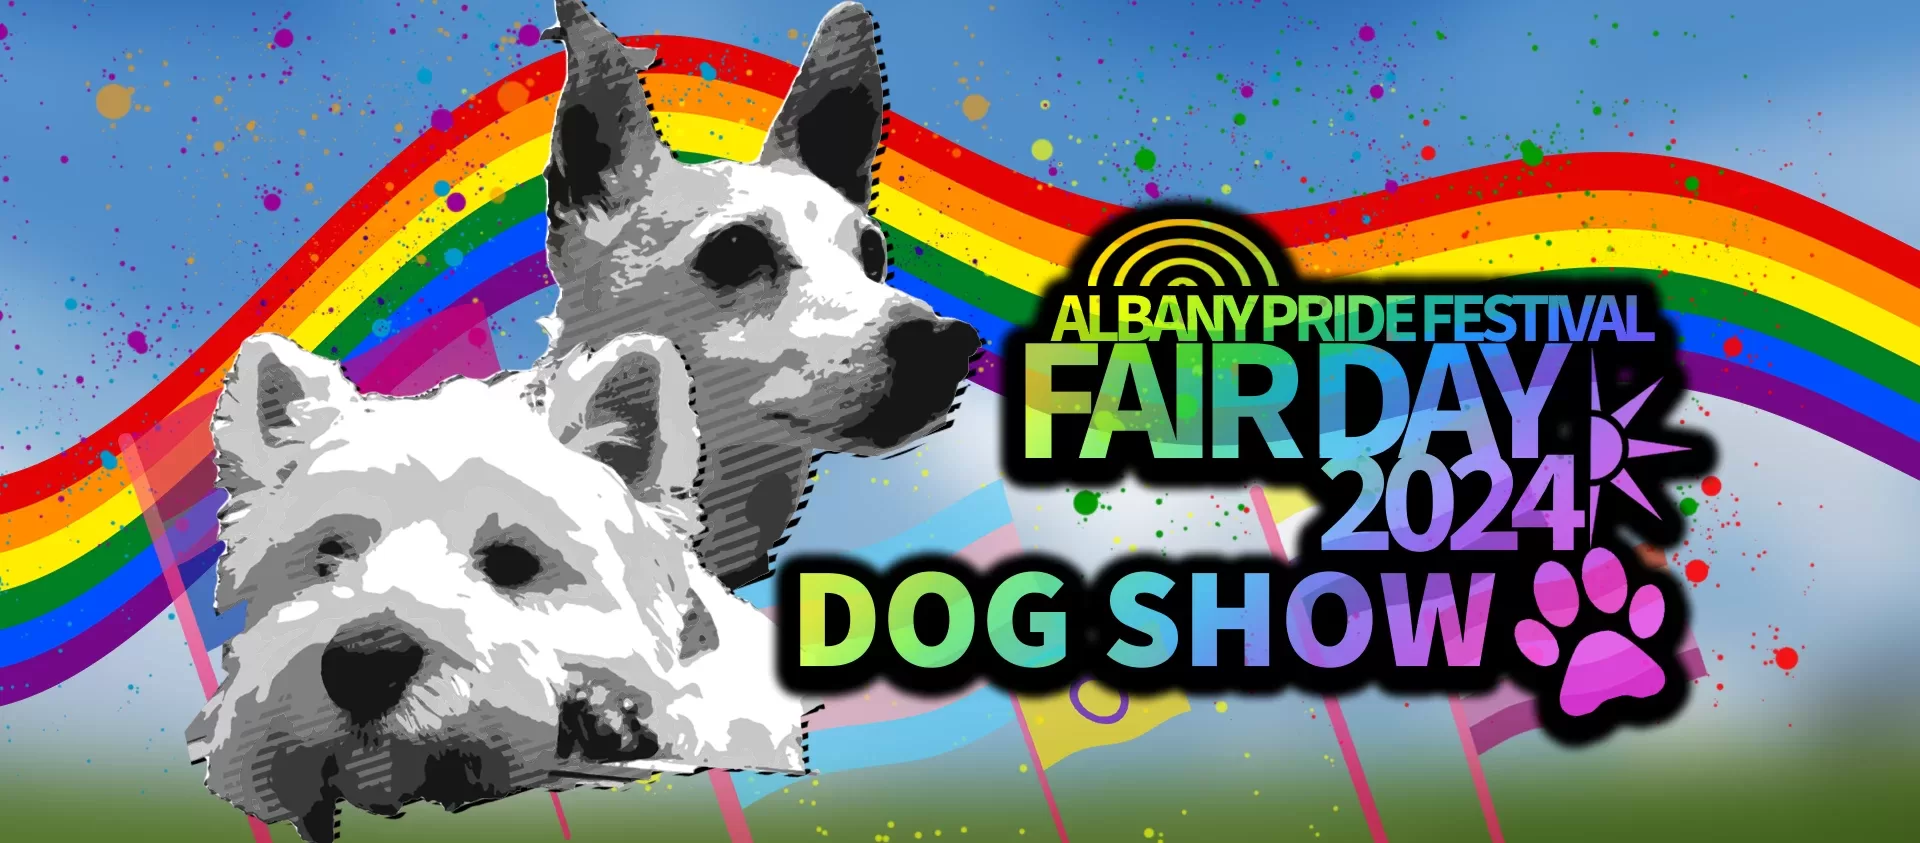 Fair Day Dog Show 2024 Albany Pride Festival